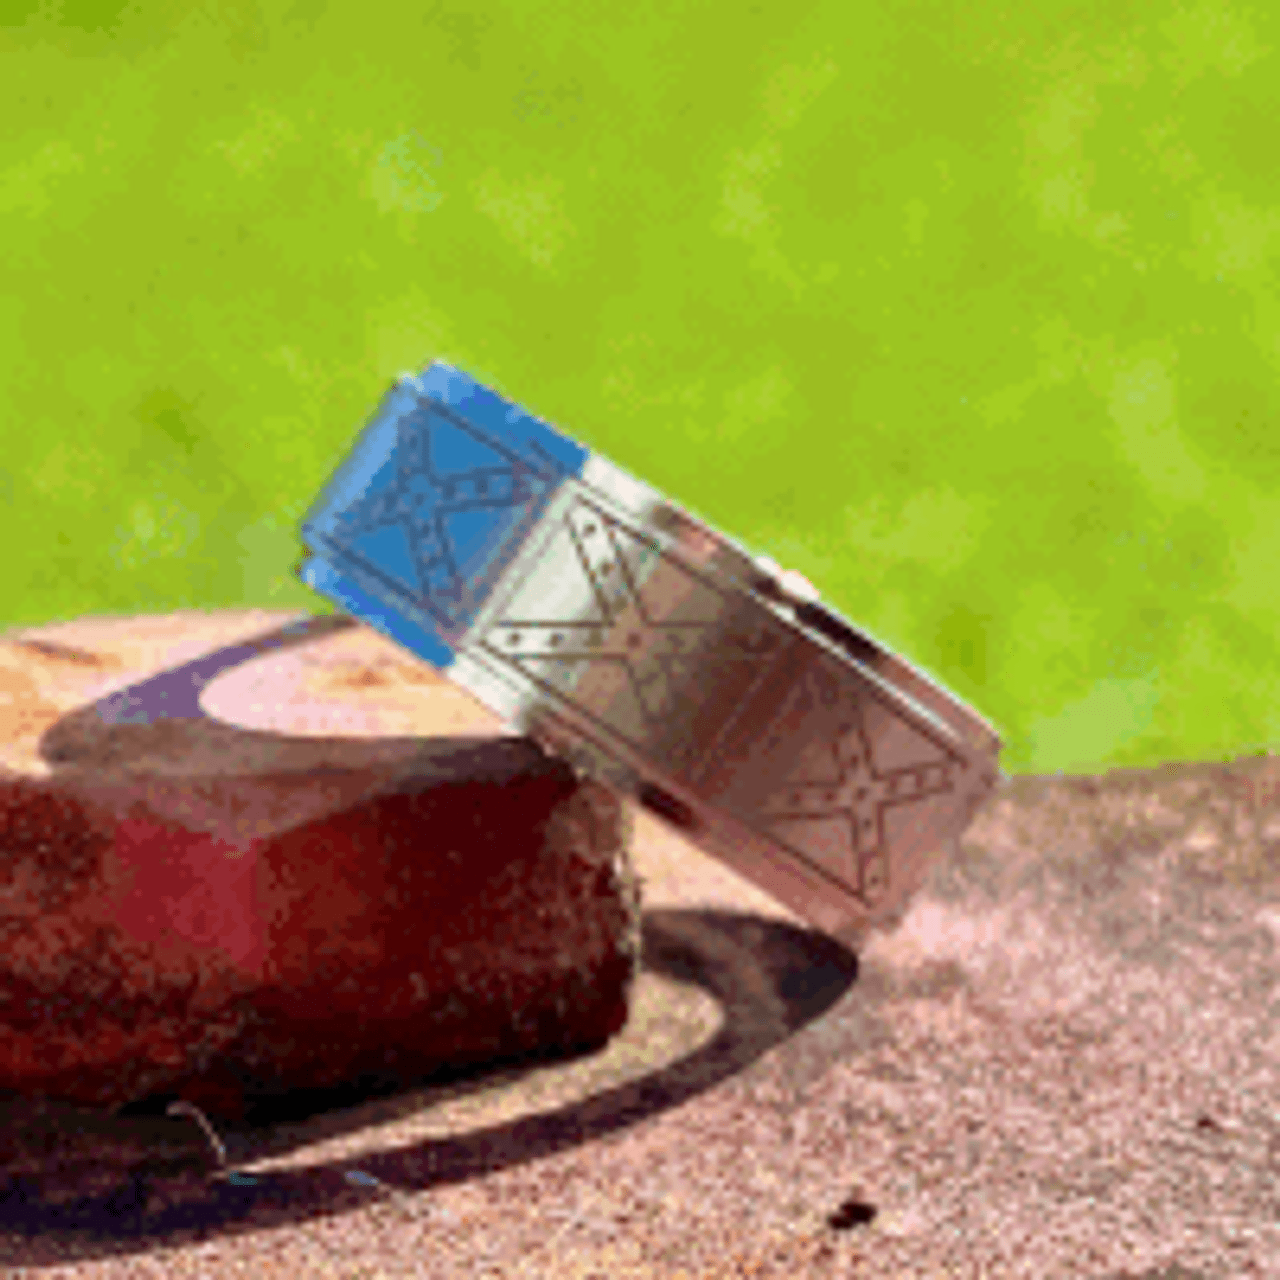 Titanium Moissanite Engagement Ring with Camo Inlay – Origin Jewelry